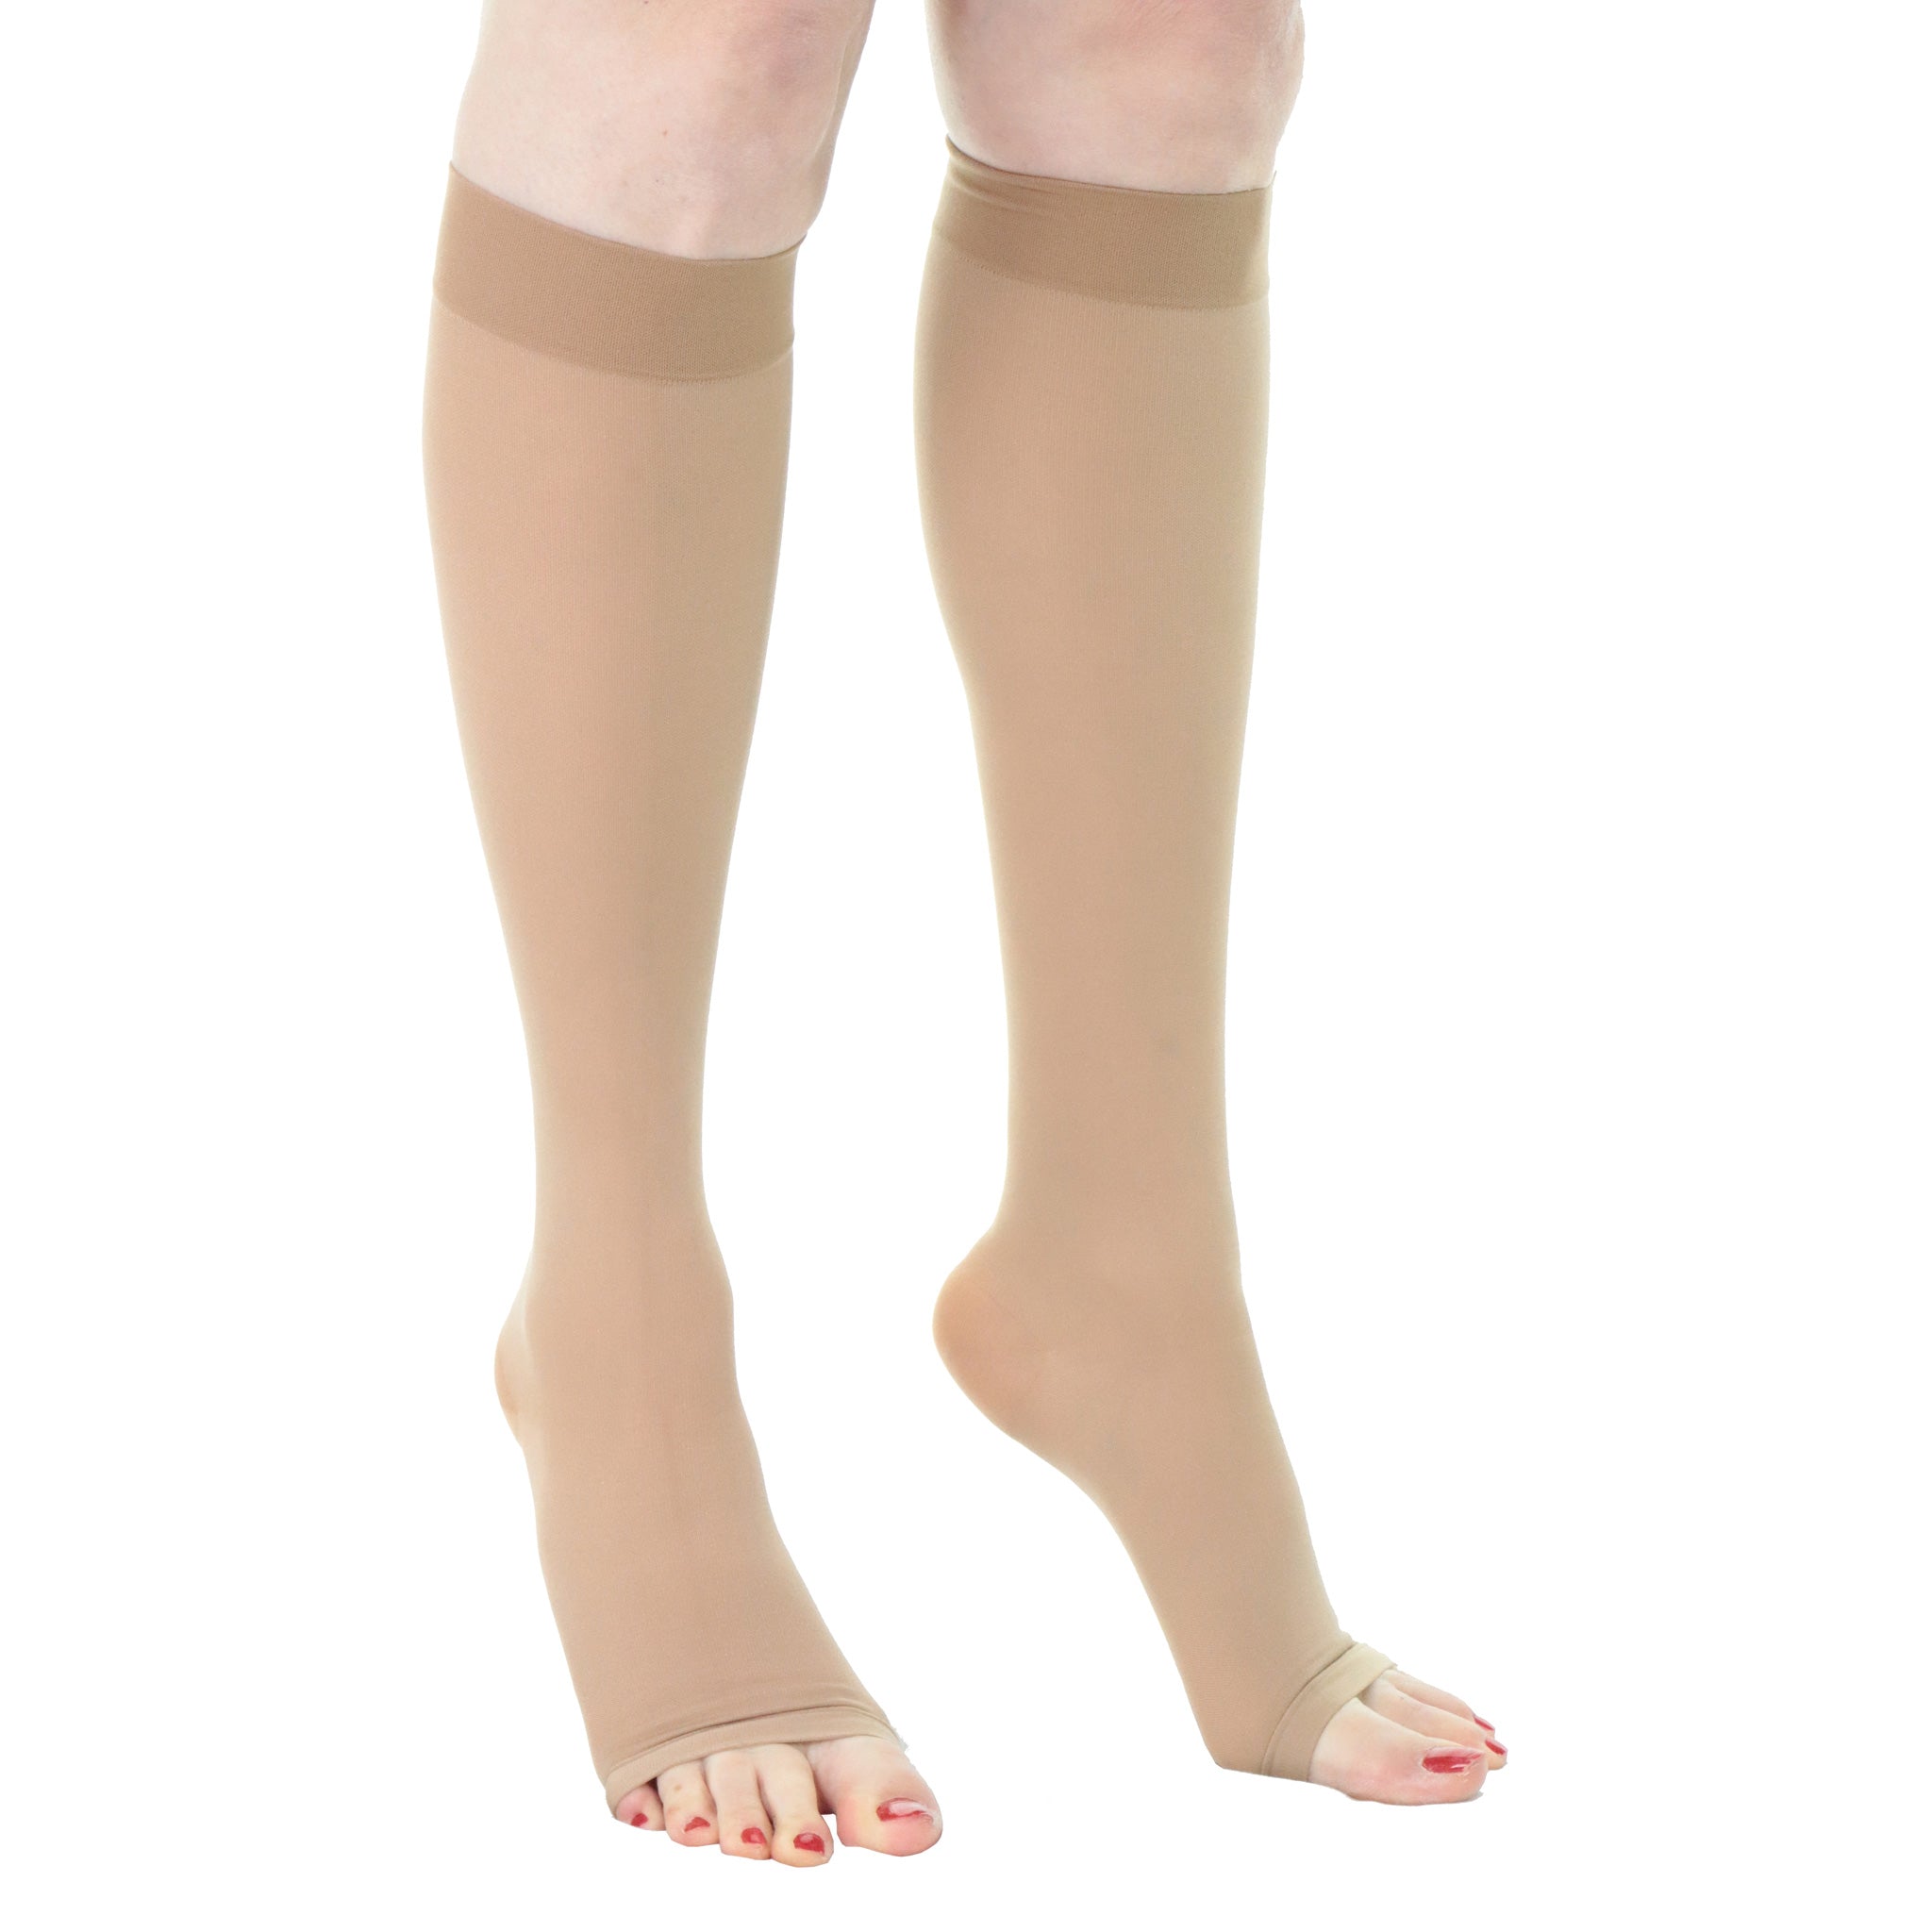 Doctor Brace Circutrend calf 30-40 mmhg womens compression stockings open toe beige